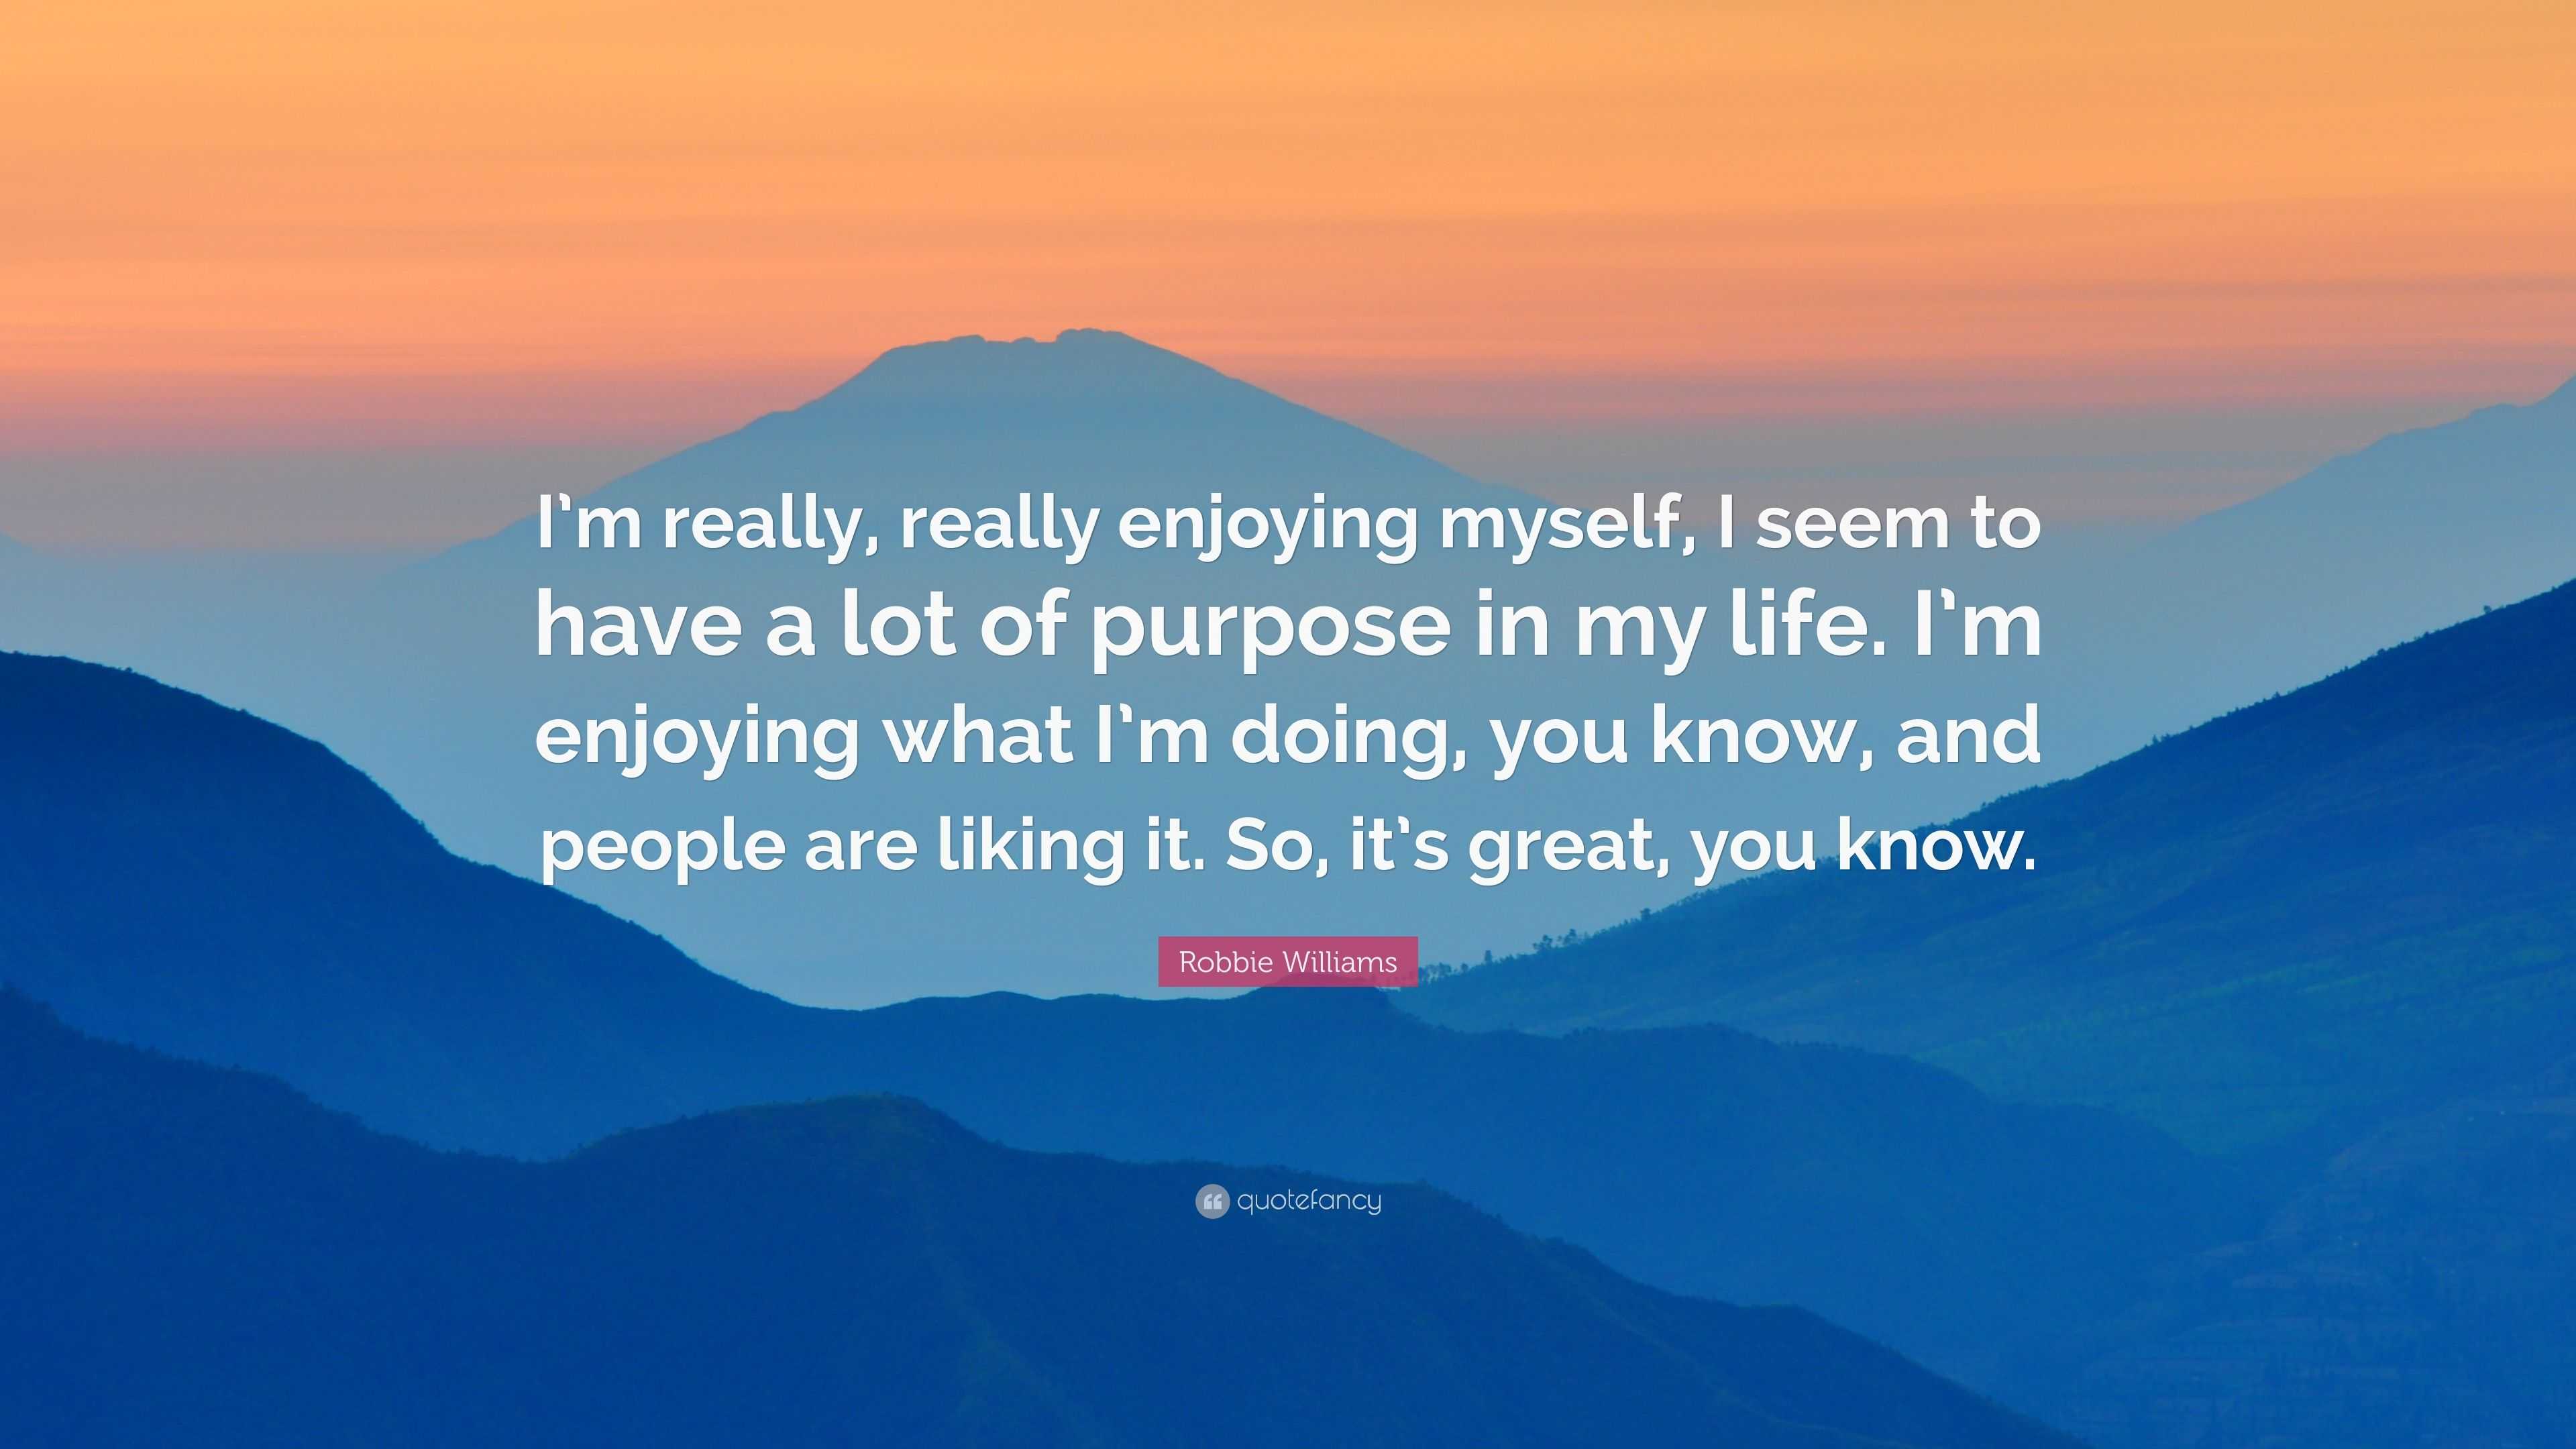 Robbie Williams Quote: “I'm really, really enjoying myself, I seem